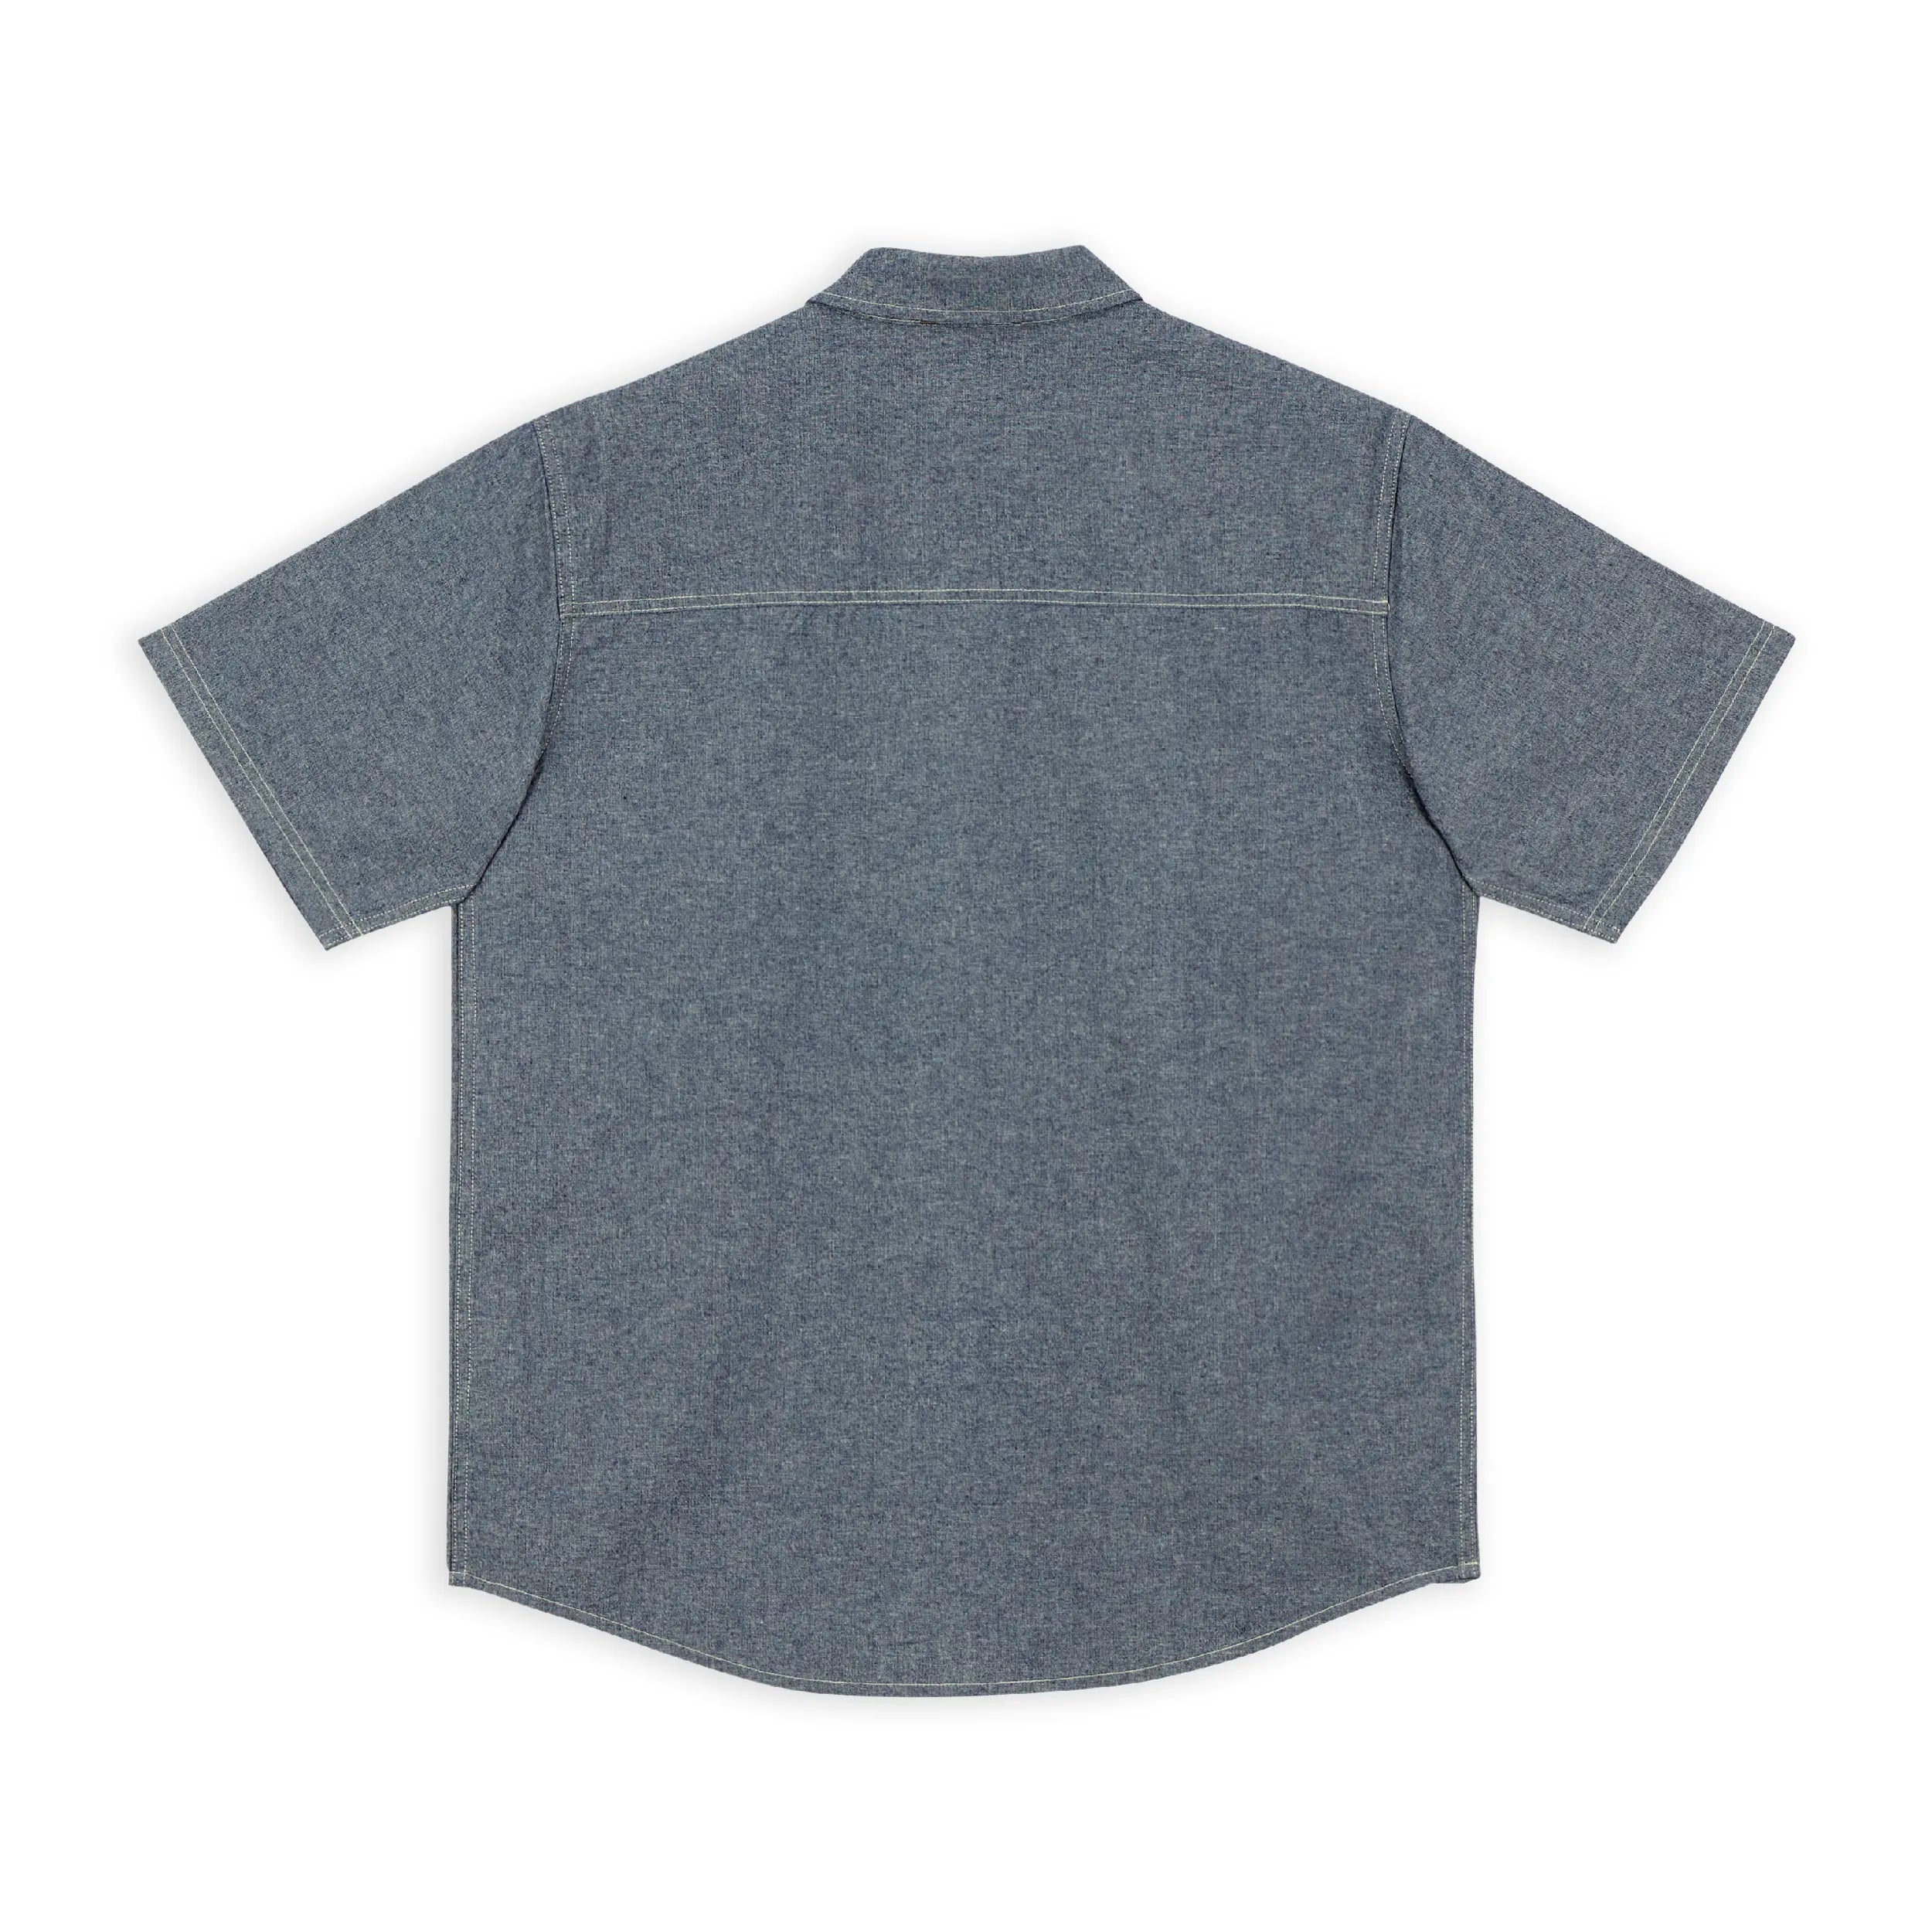 Mens Athletic Performance Shirt Long Sleeve Gray Rainbow Trout XXL